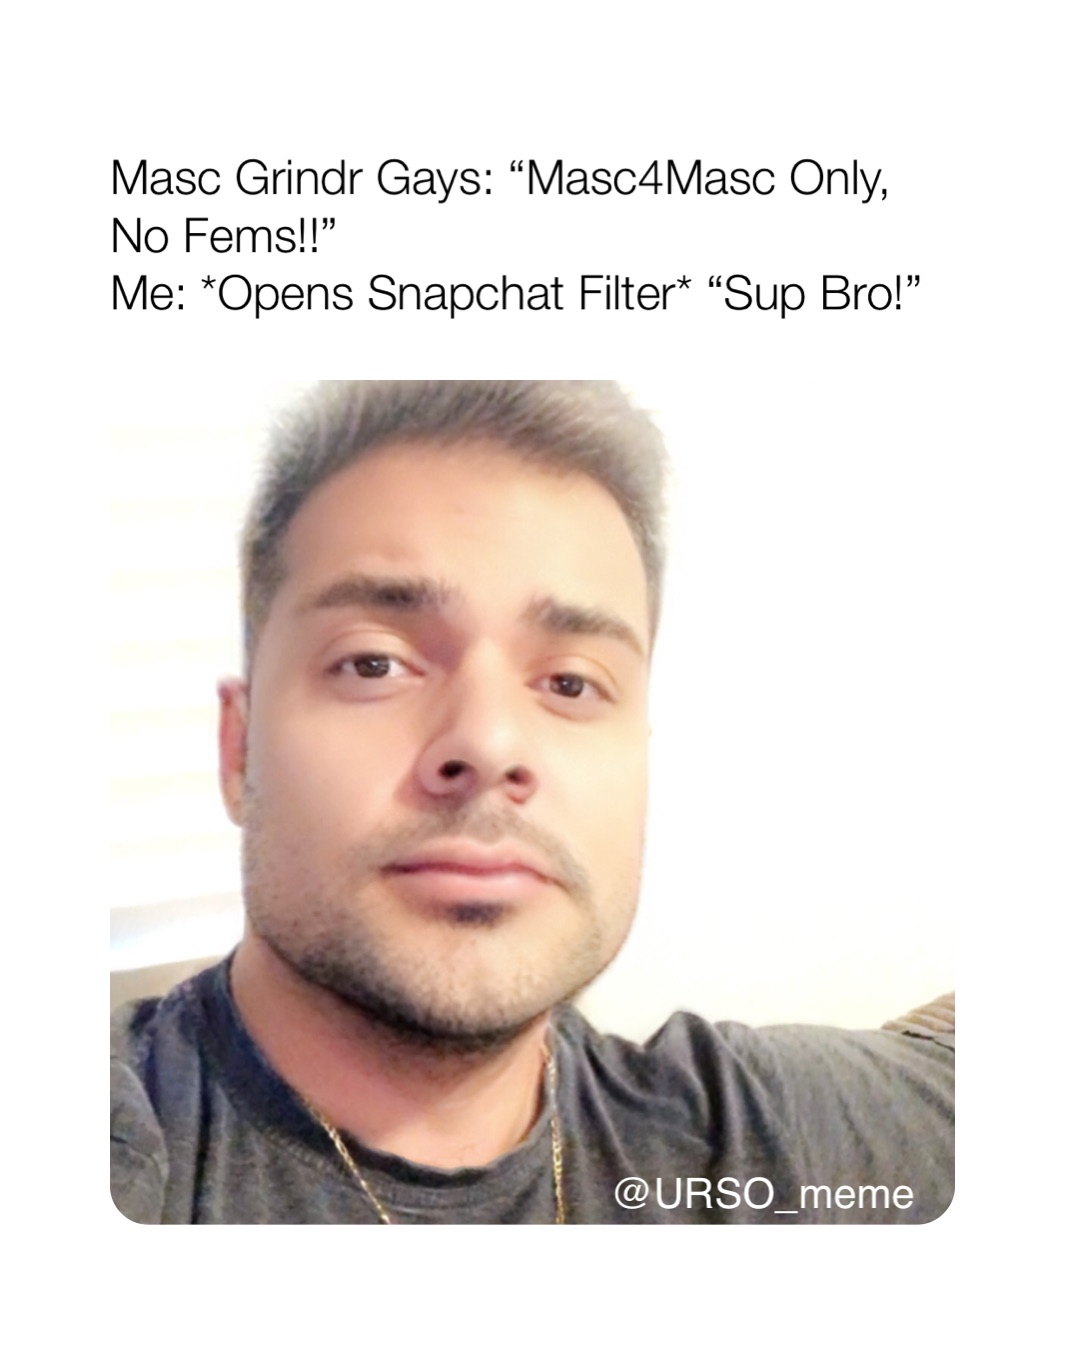 snapchat not gay meme funny